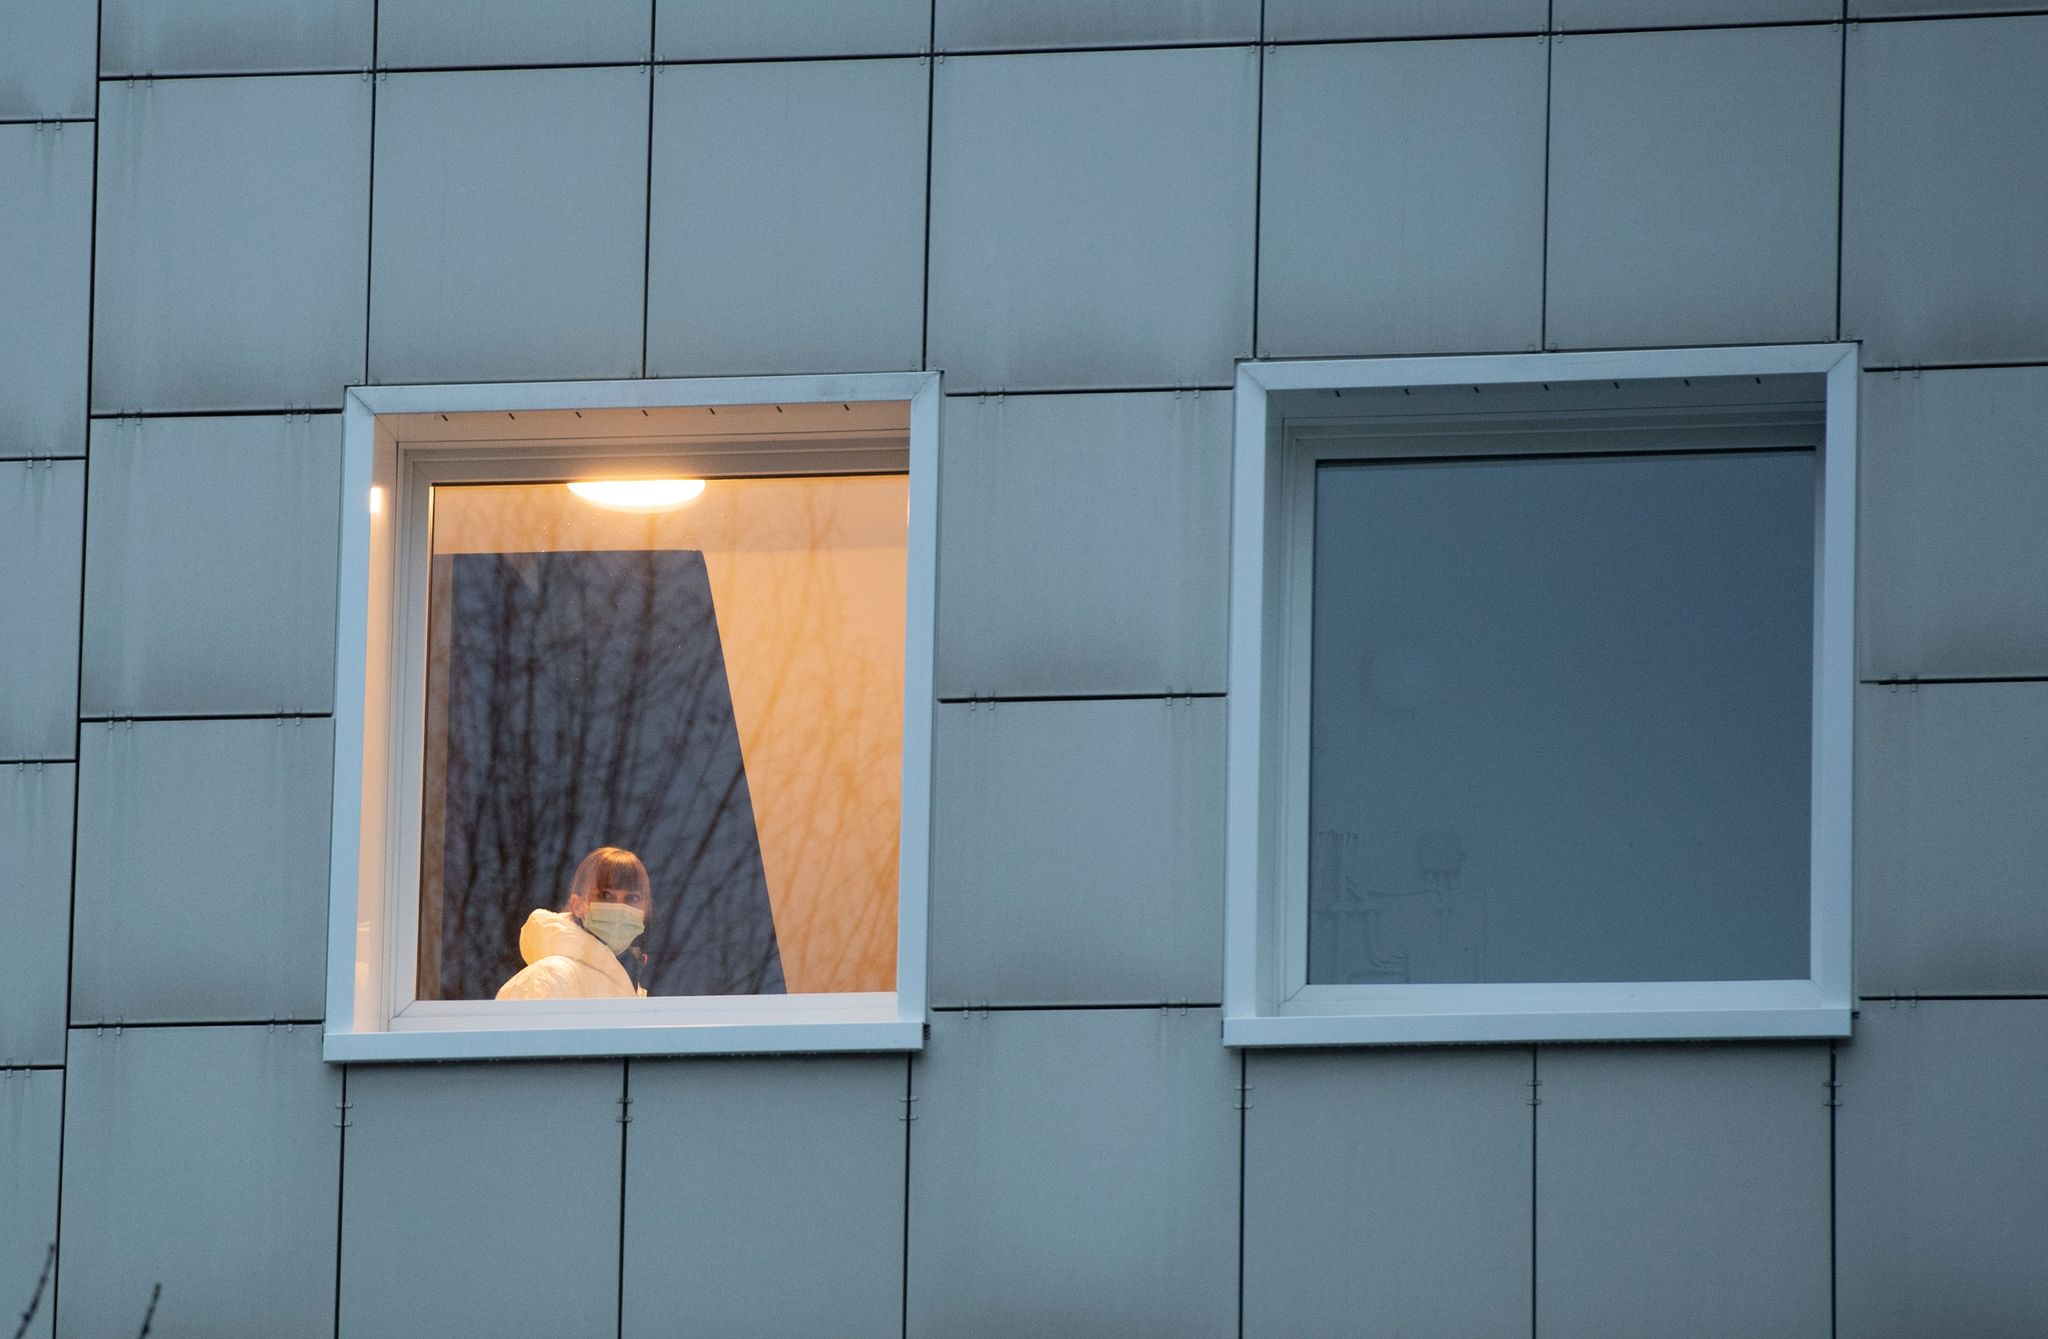 Tödlicher Angriff in Berlin – Verdächtiger in Klinik